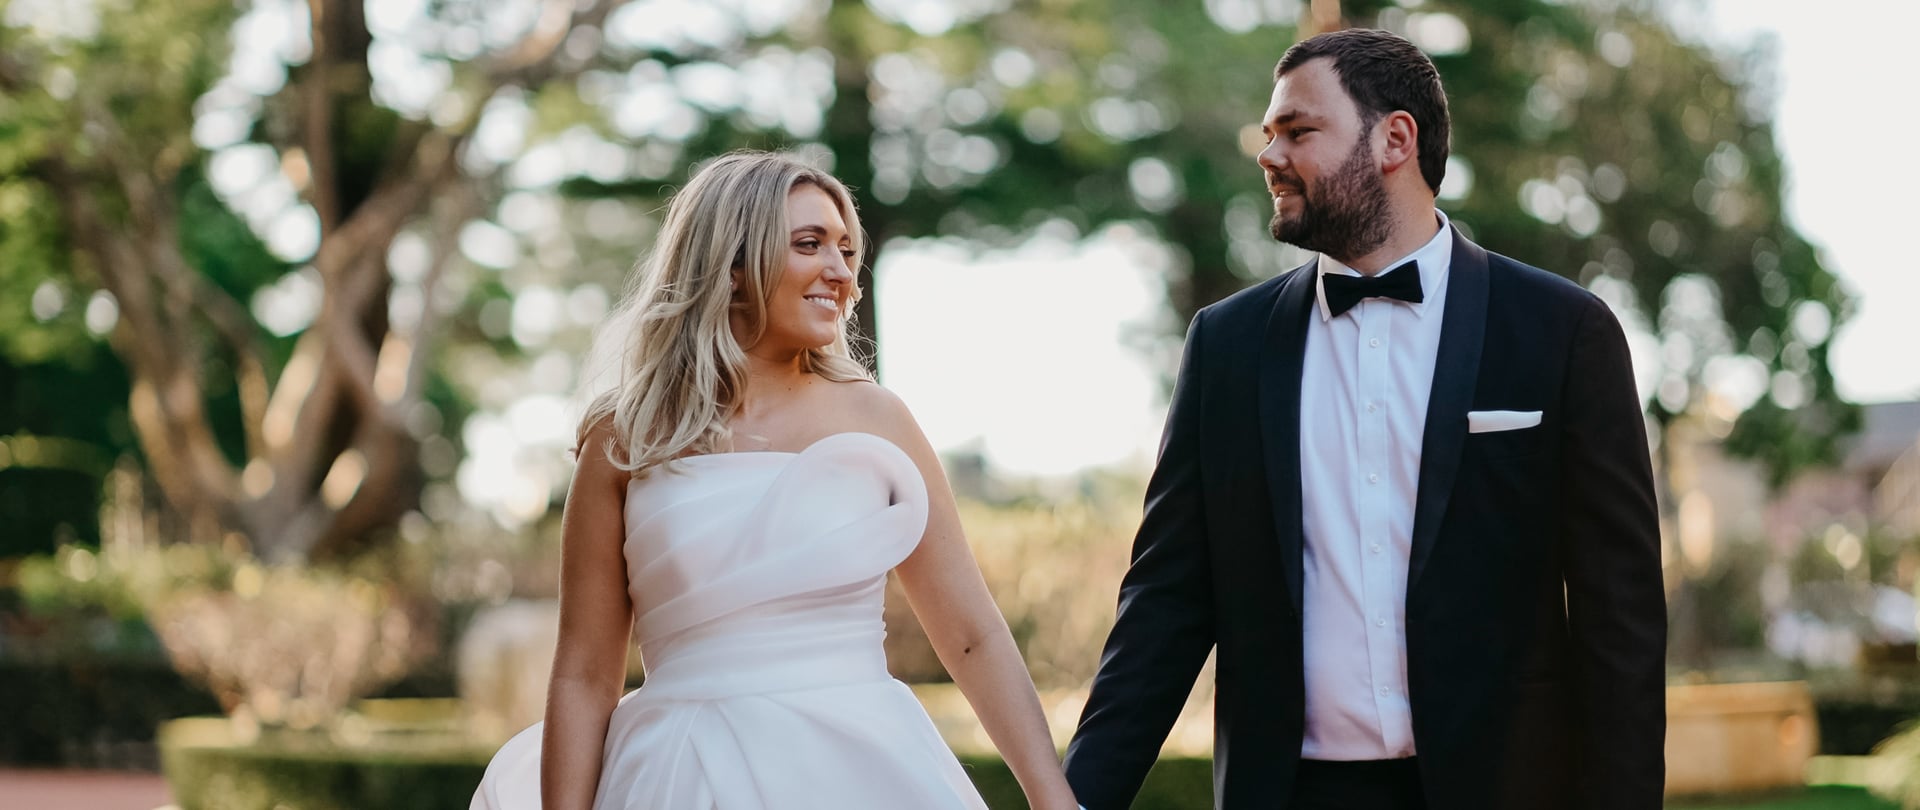 Cal & Maddie Wedding Video Filmed atSydney,New South Wales